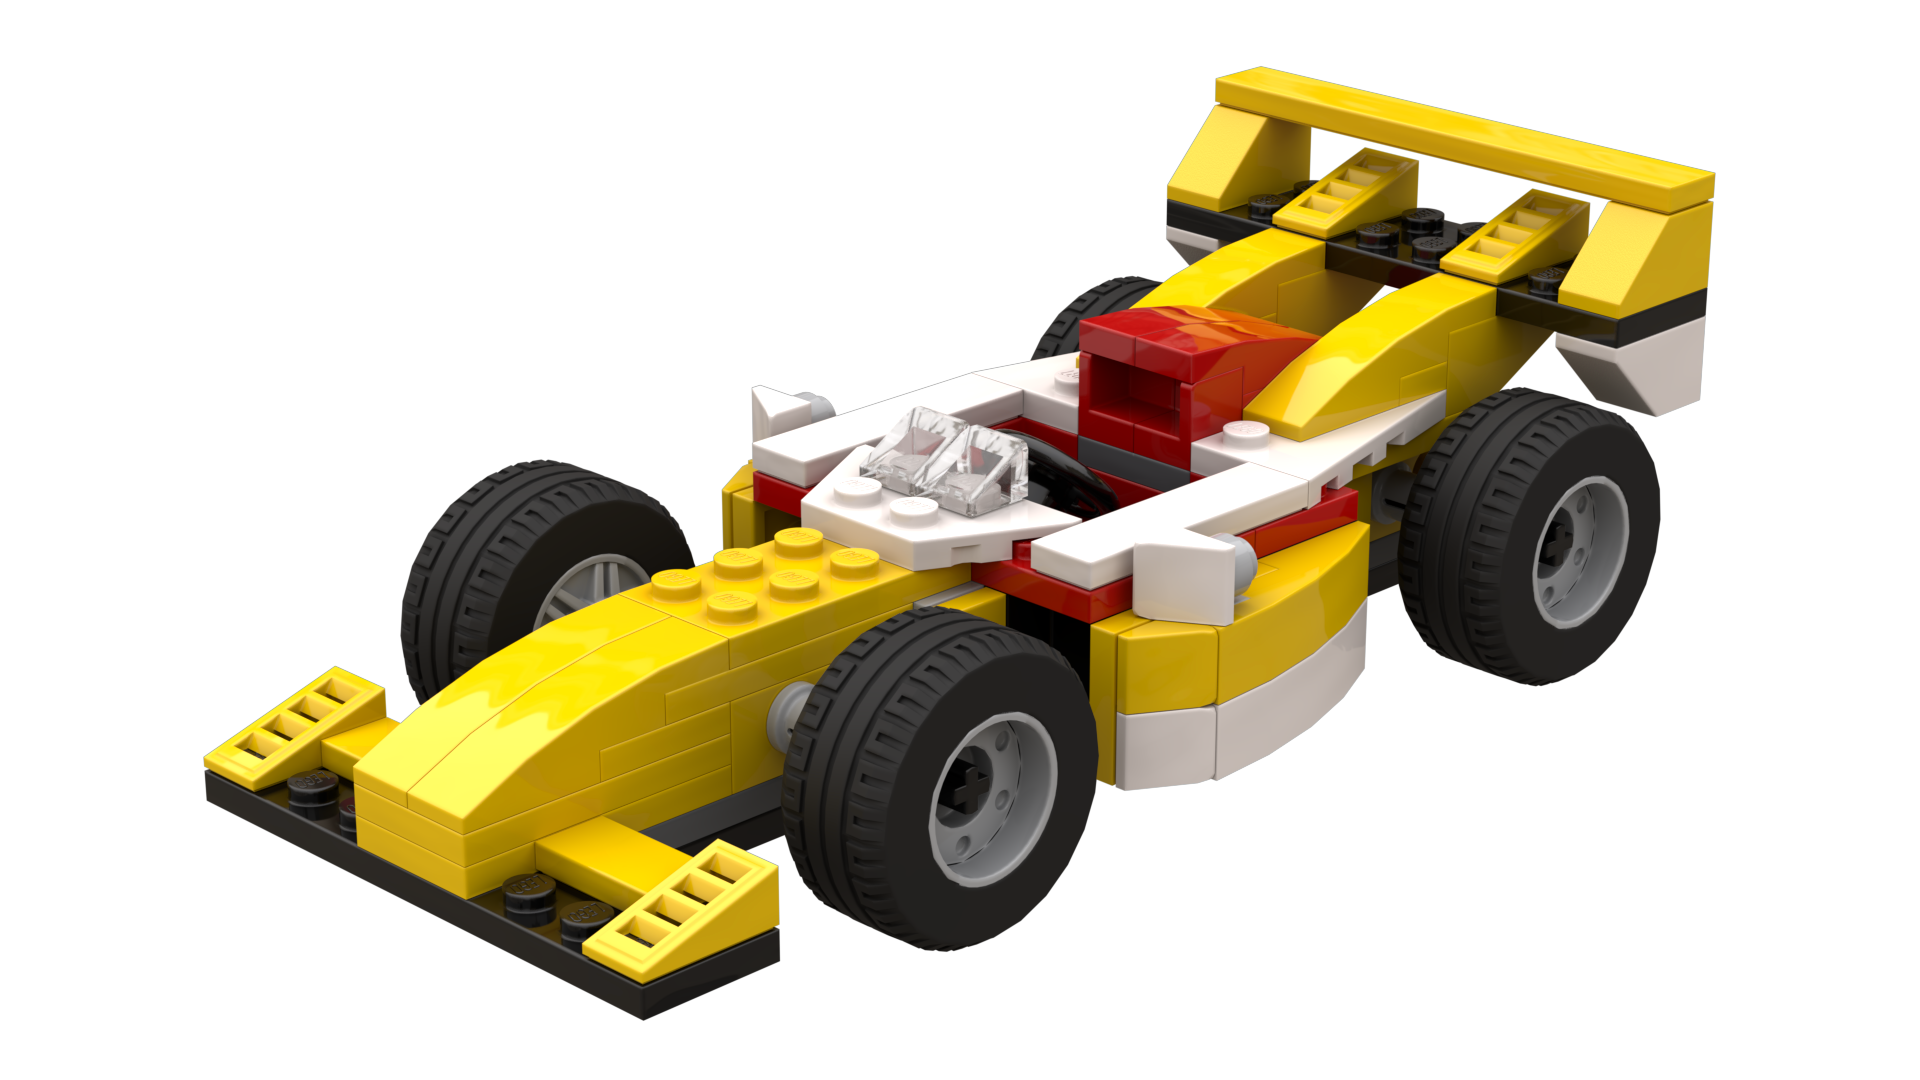 31002: Super Racer